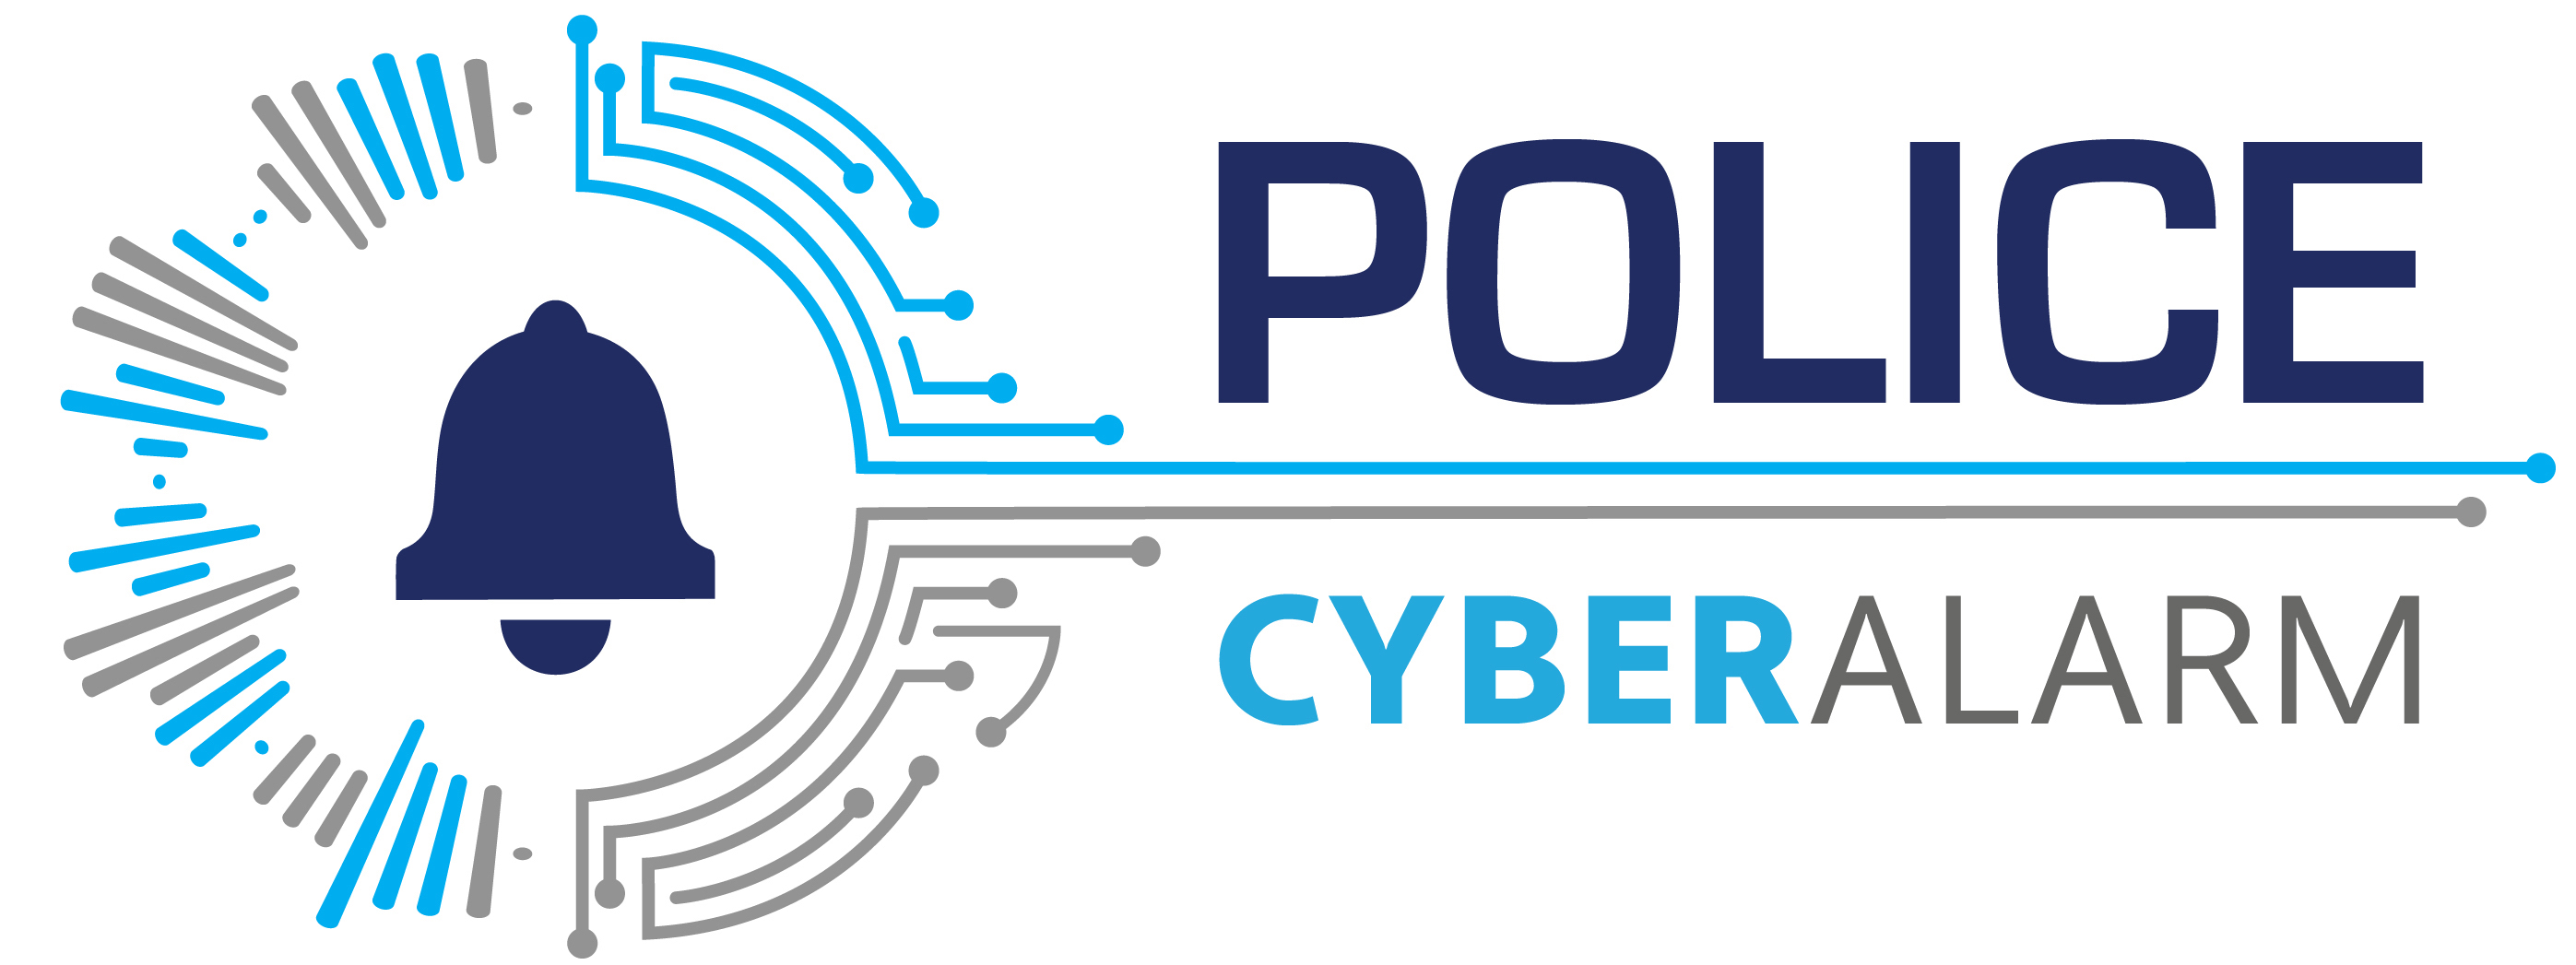 Police Cyber Alarm Master Logo copy